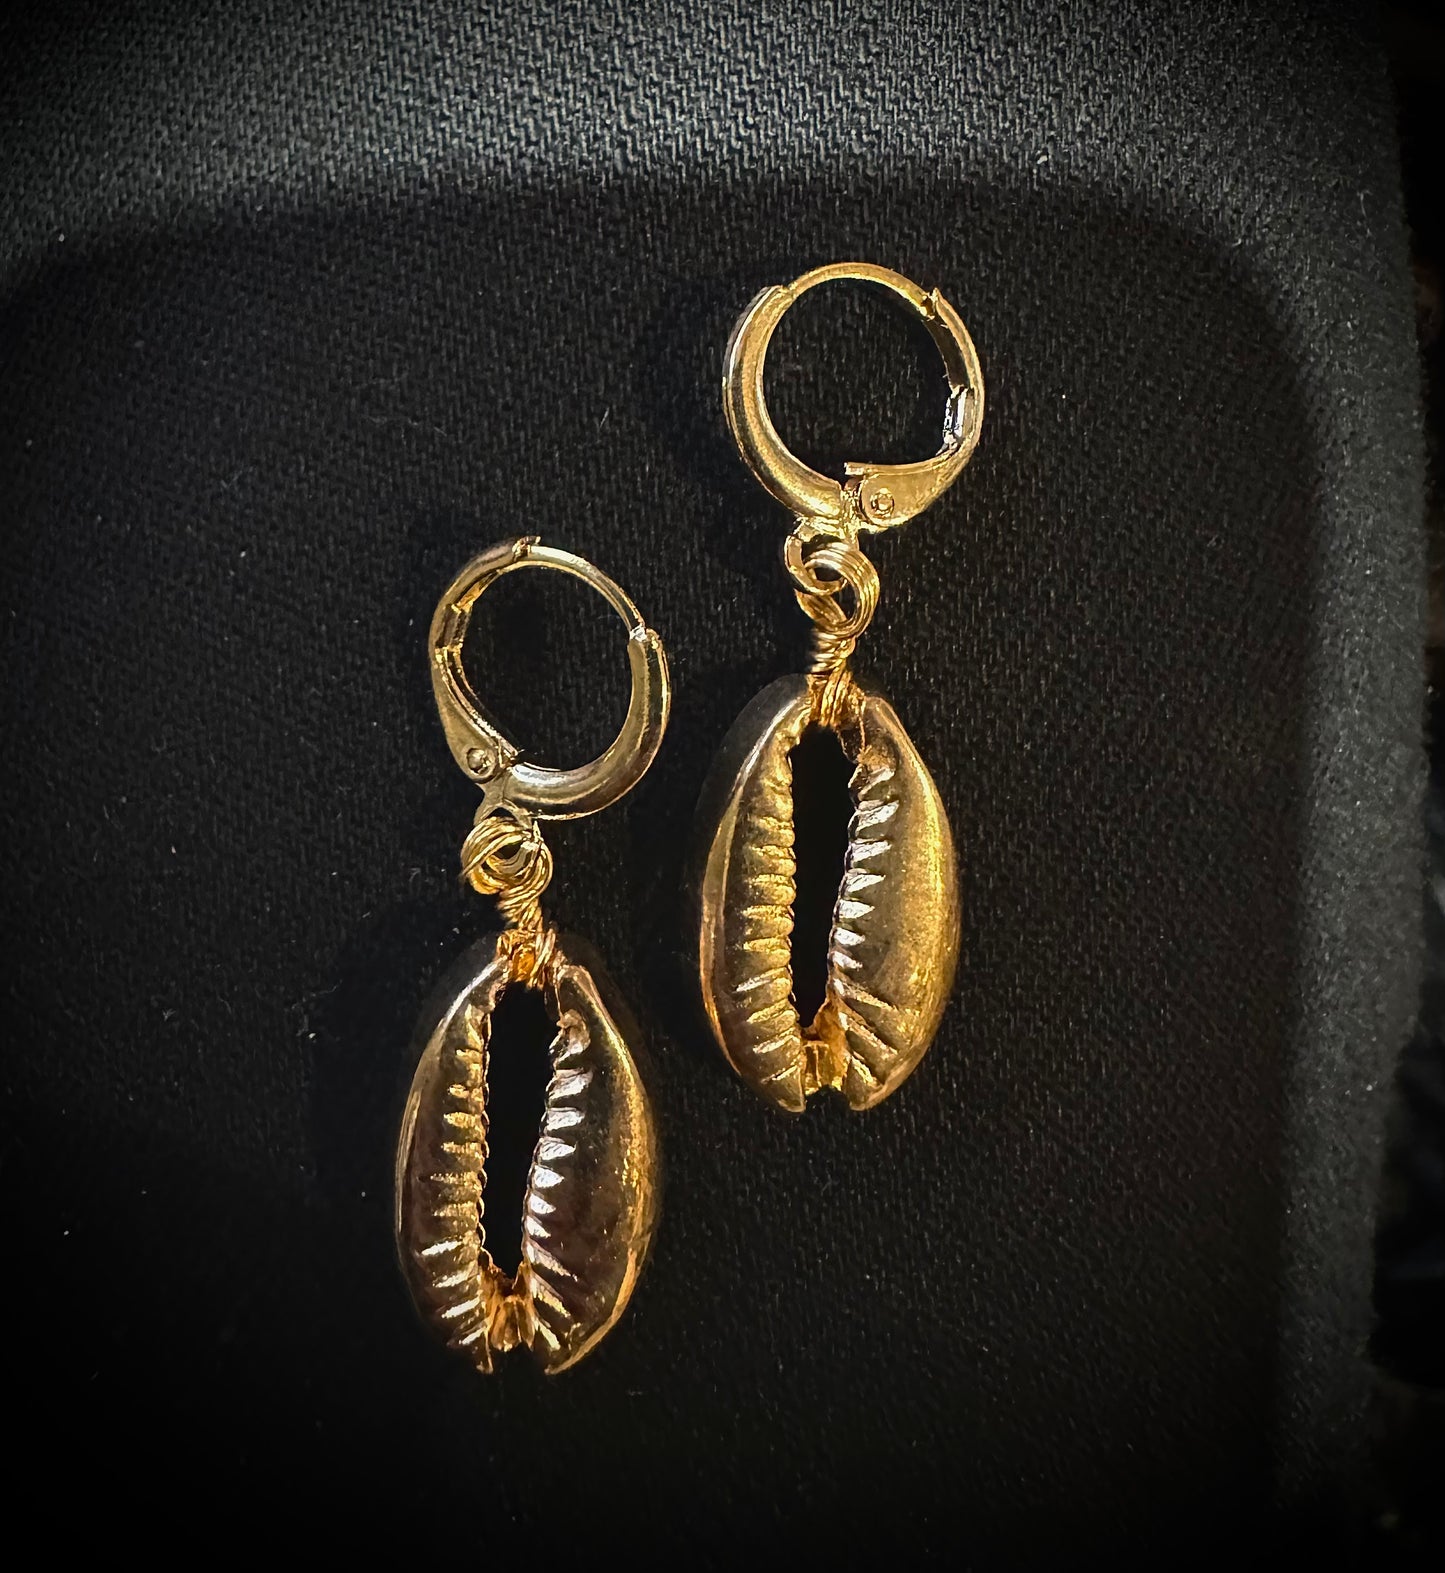 Small shell2 earrings